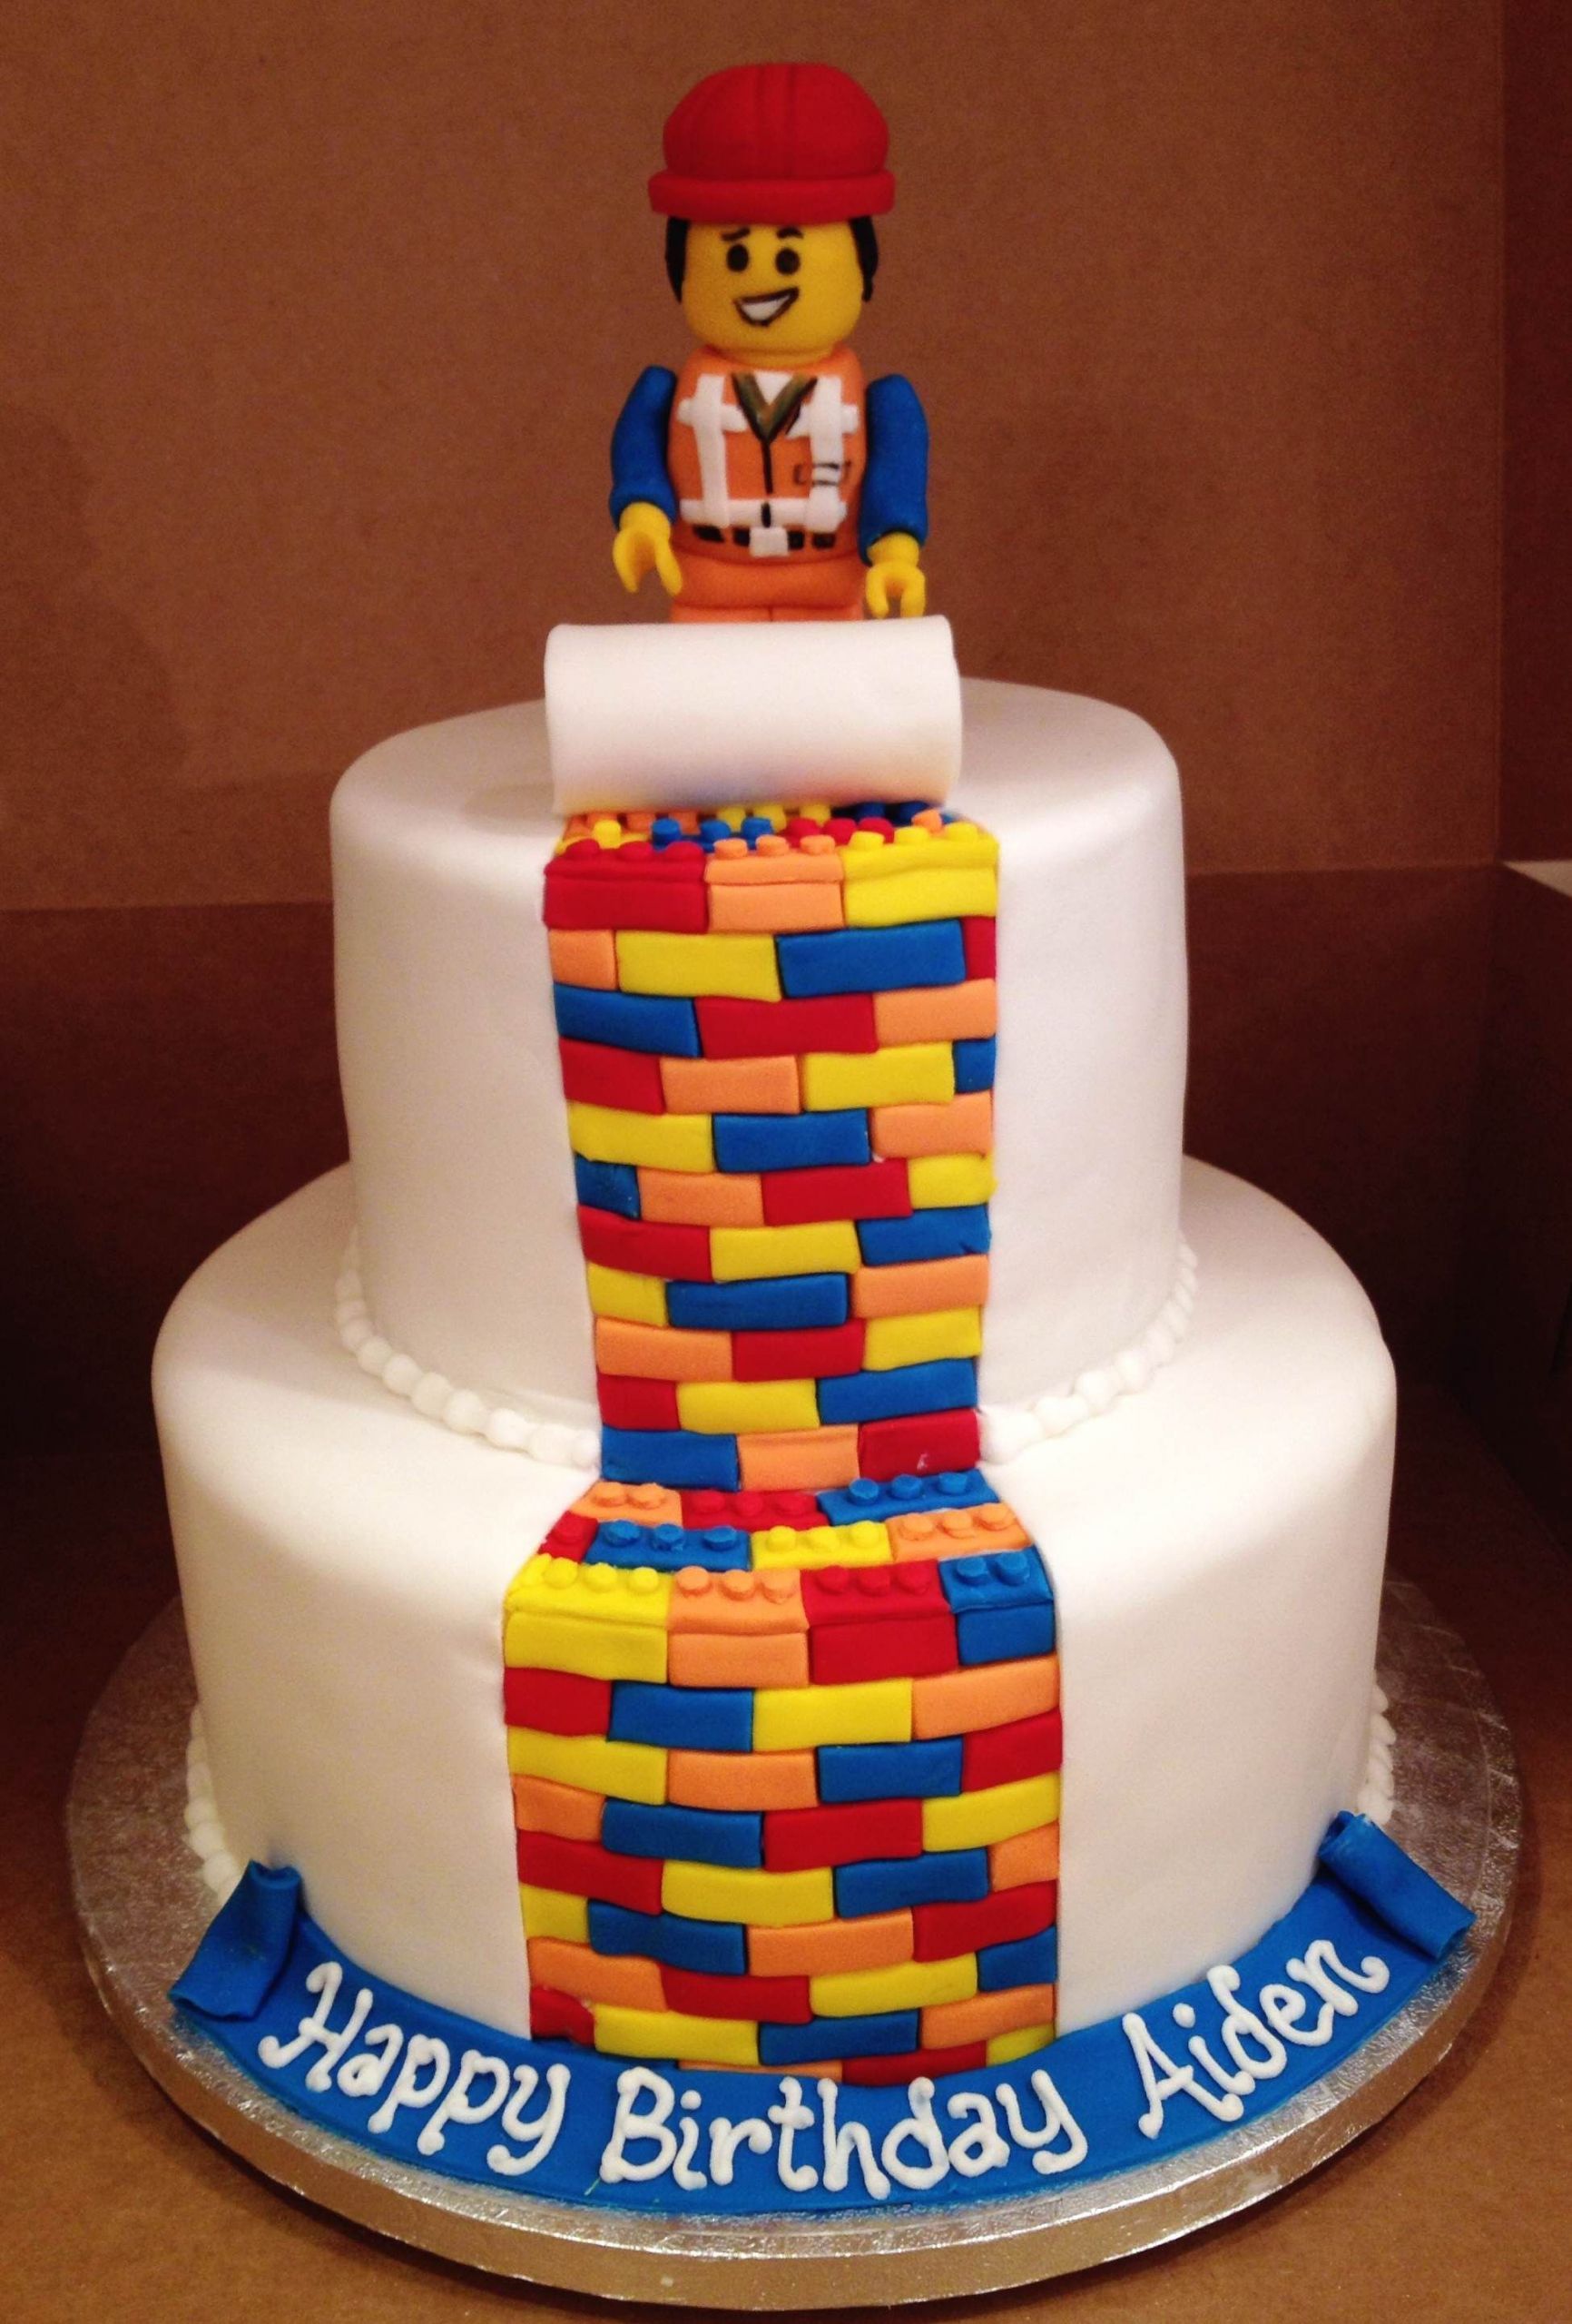 Lego Movie Birthday Cake
 Lego Movie Themed Custom Birthday Cake With images